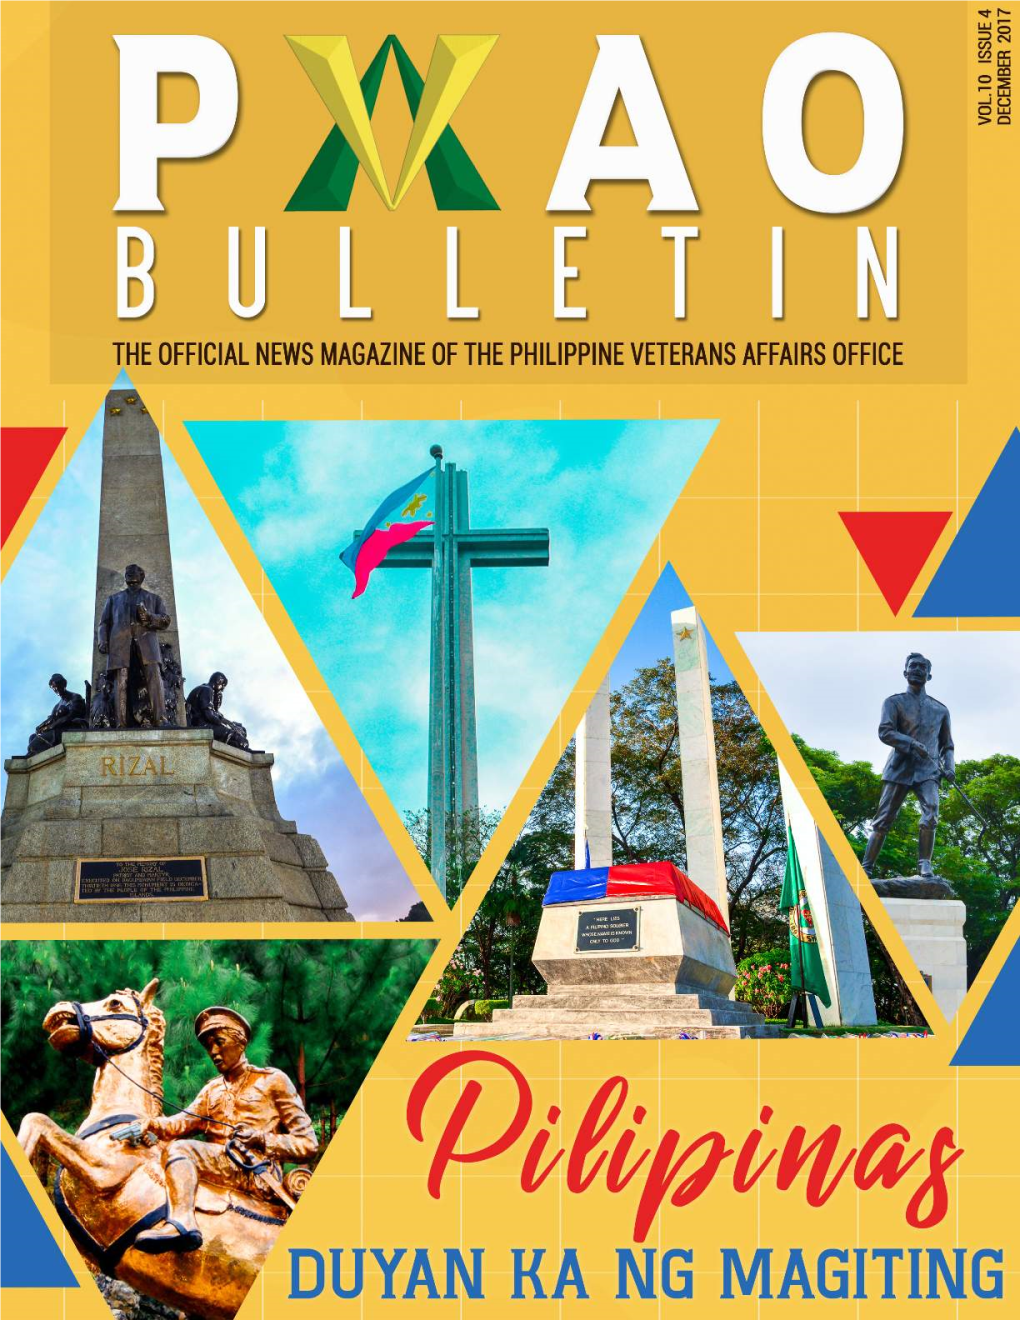 Pvao Bulletin Vol 10 Issue 4